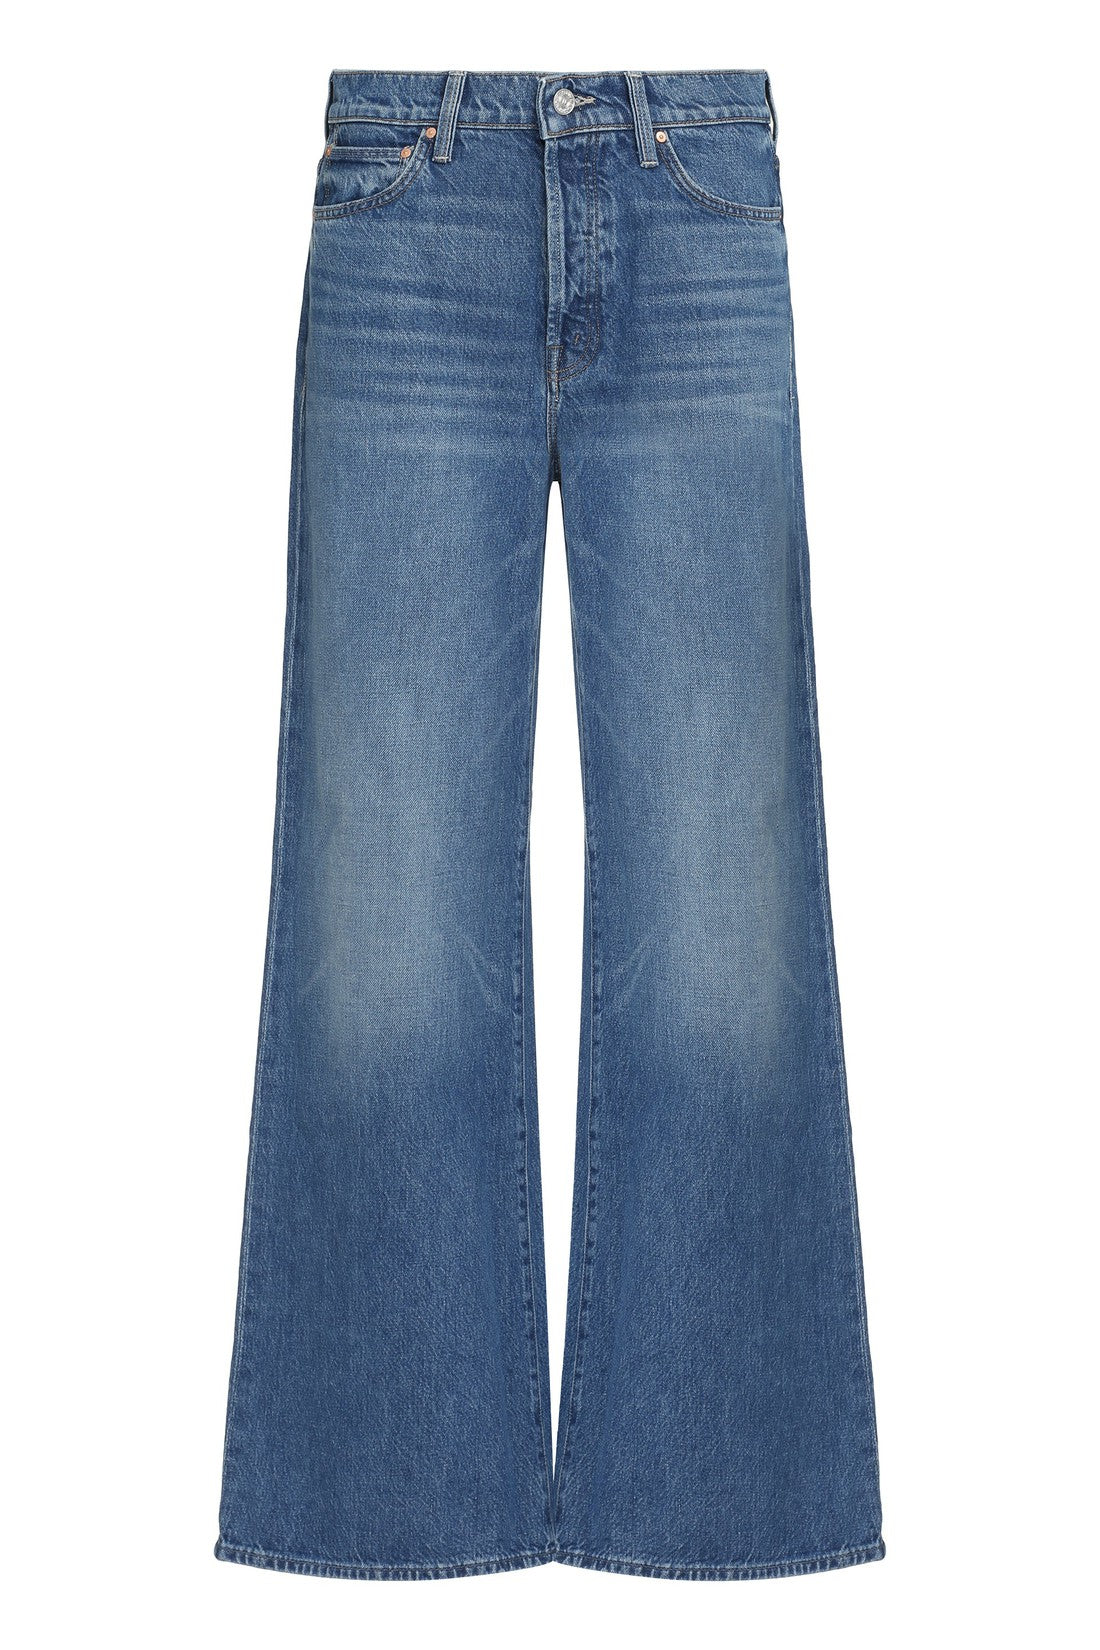 Mother-OUTLET-SALE-The Ditcher Roller Sneak jeans-ARCHIVIST